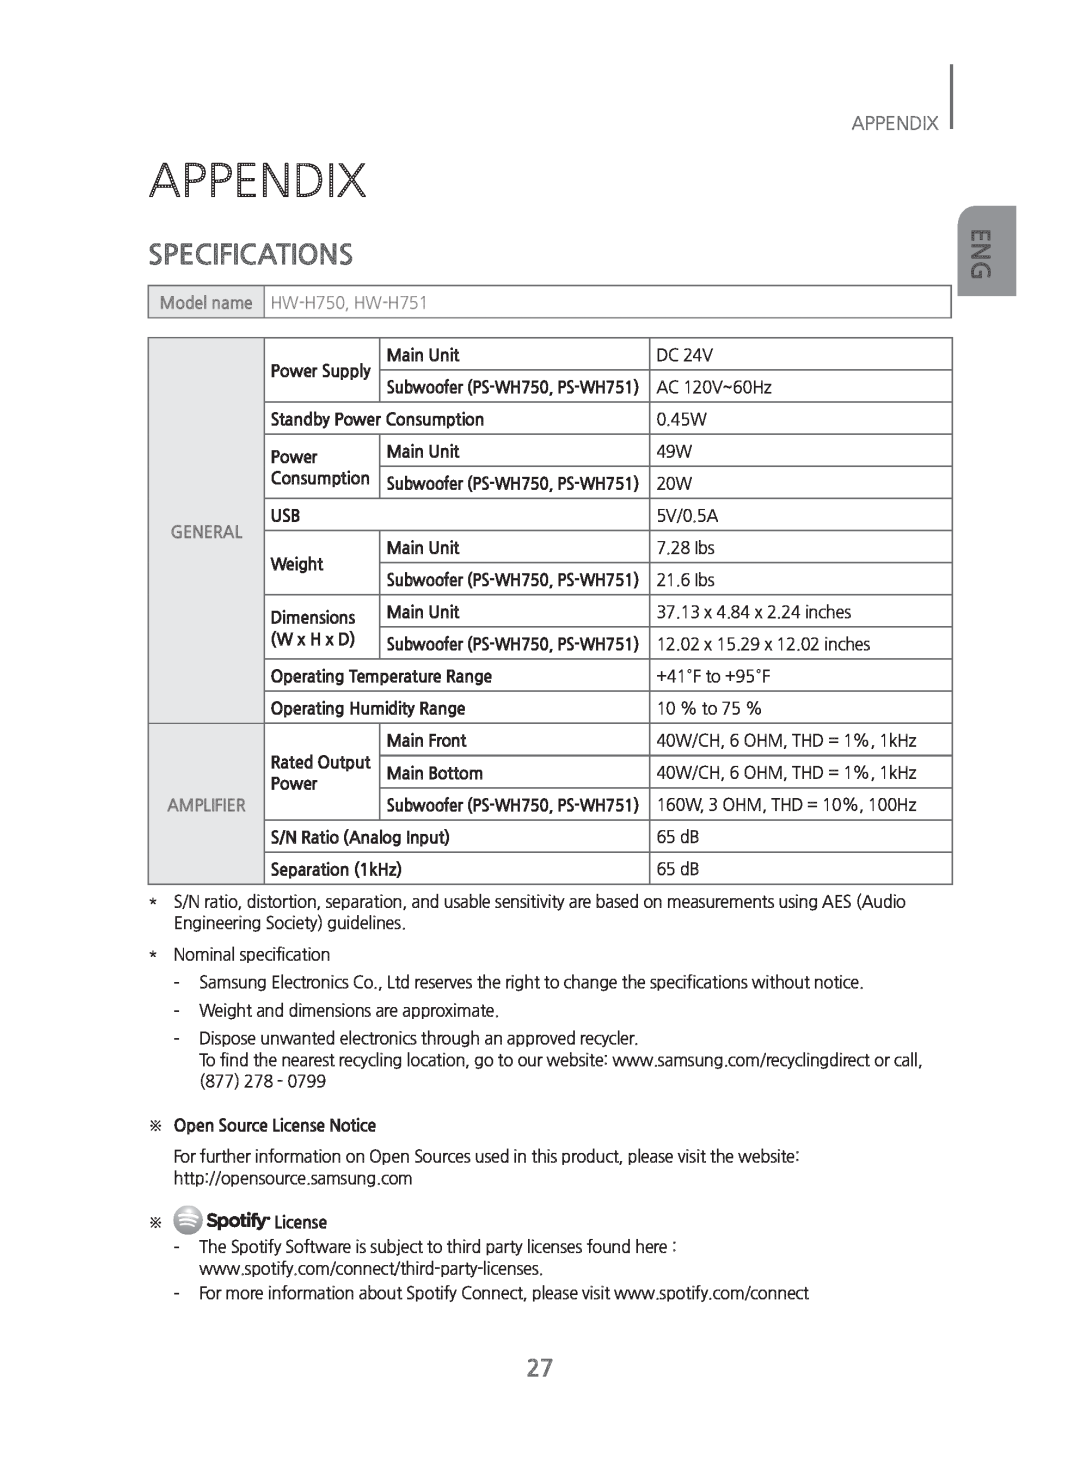 Samsung HW-H750/ZA manual Appendix, Specifications 